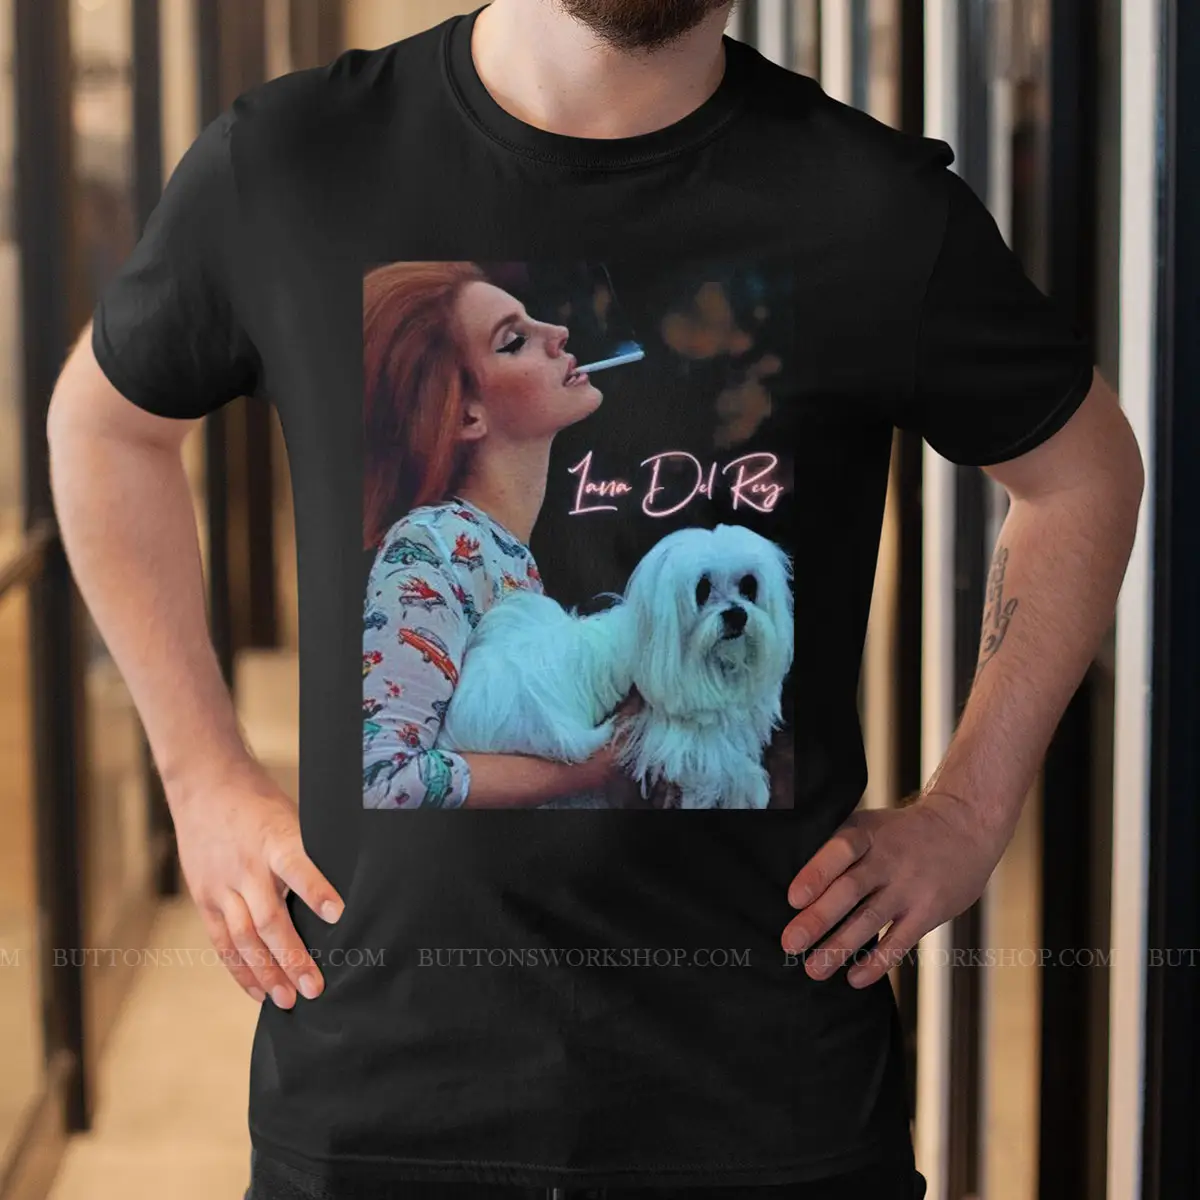 Lana Del Rey Graphic Tee Unisex Tshirt